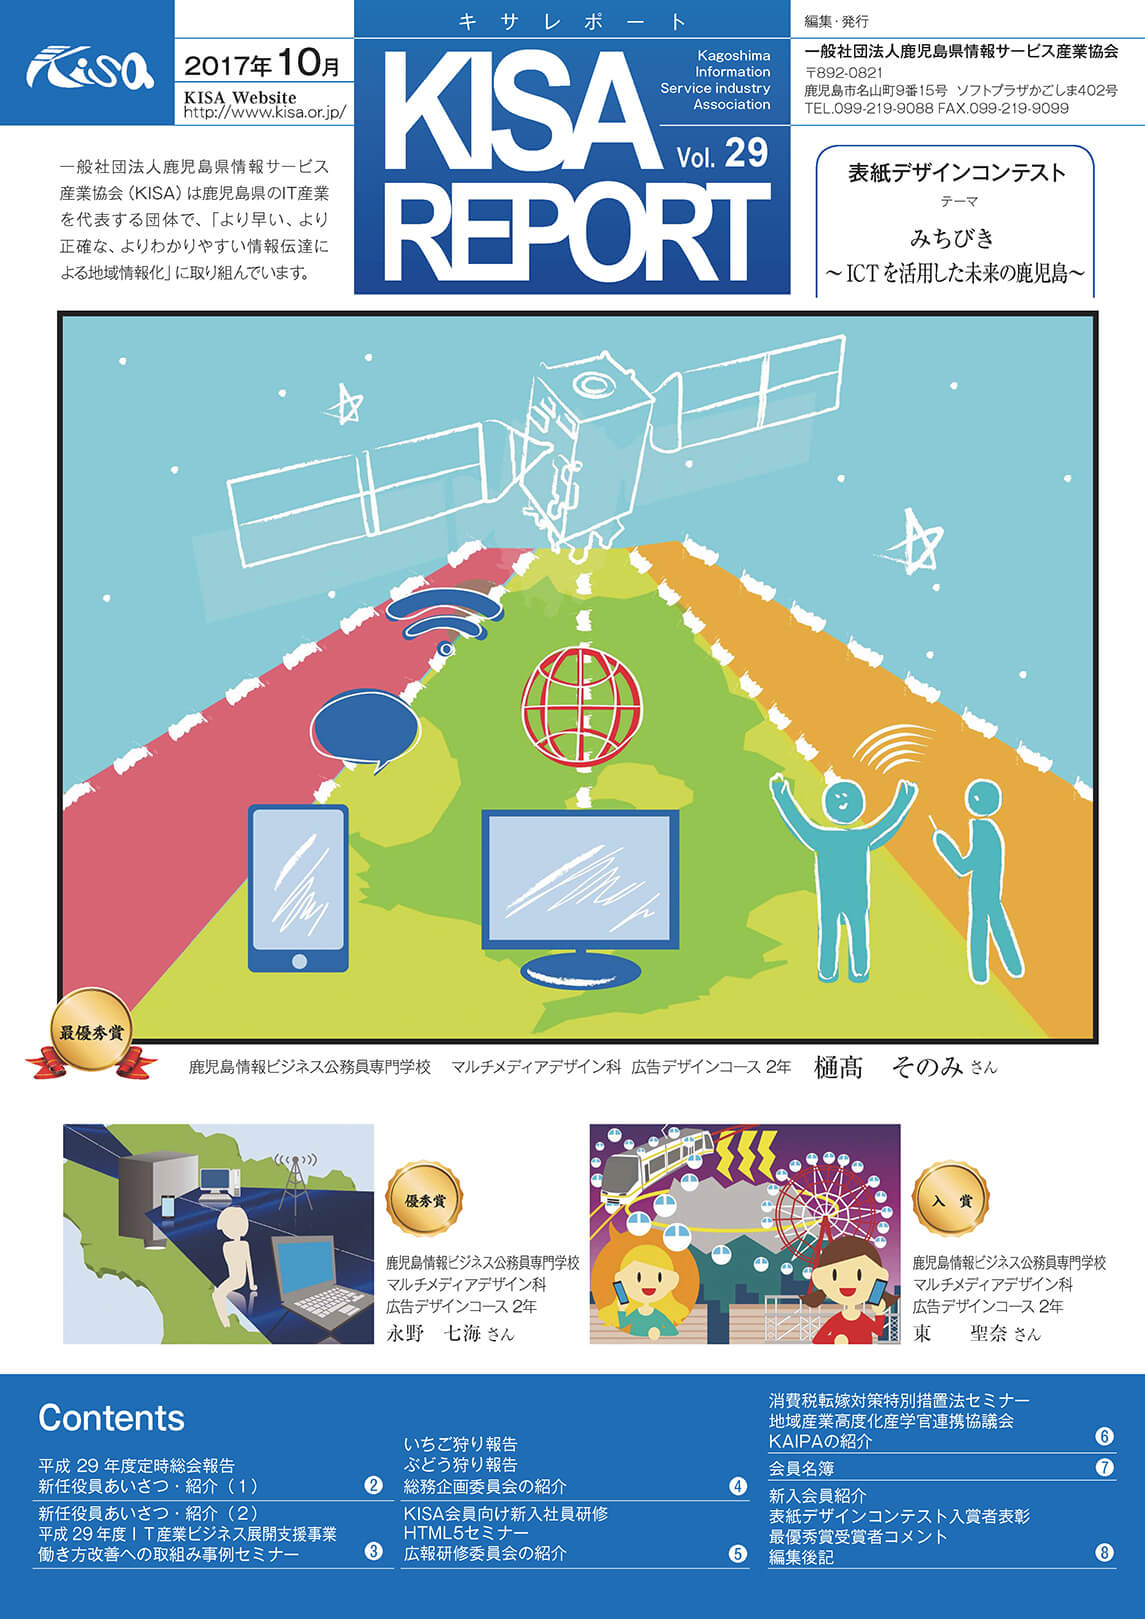 『KISA REPORT Vol.29』発刊しました